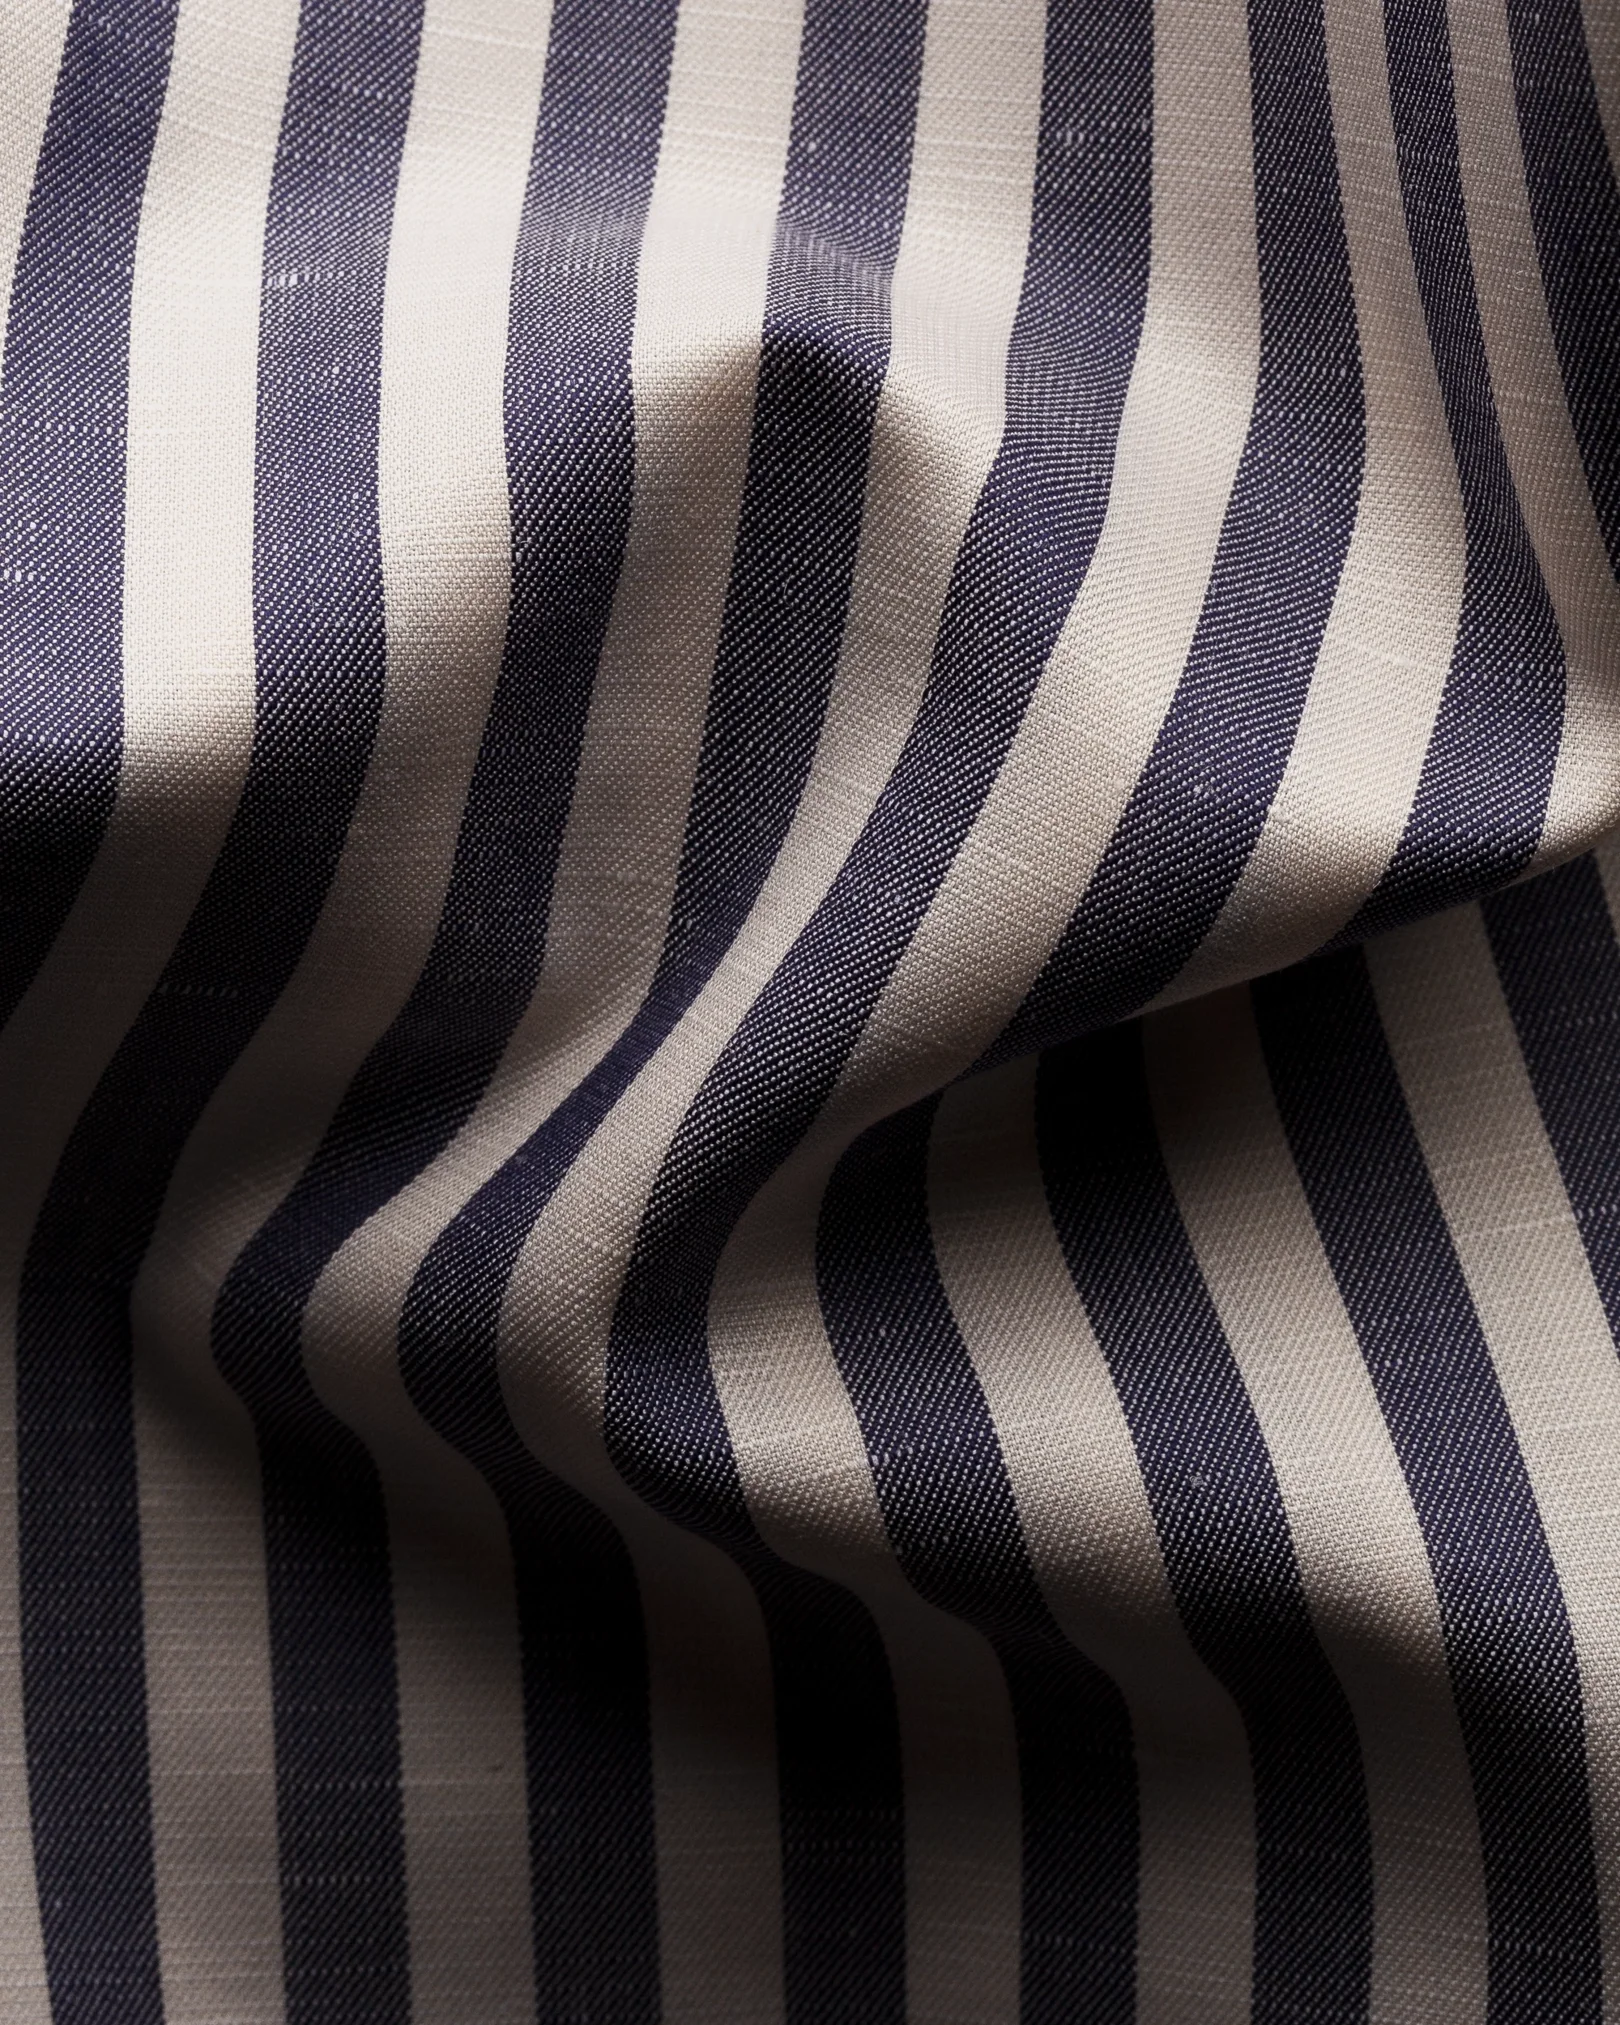 Eton - navy blue bengal stripe linen cotton shirts